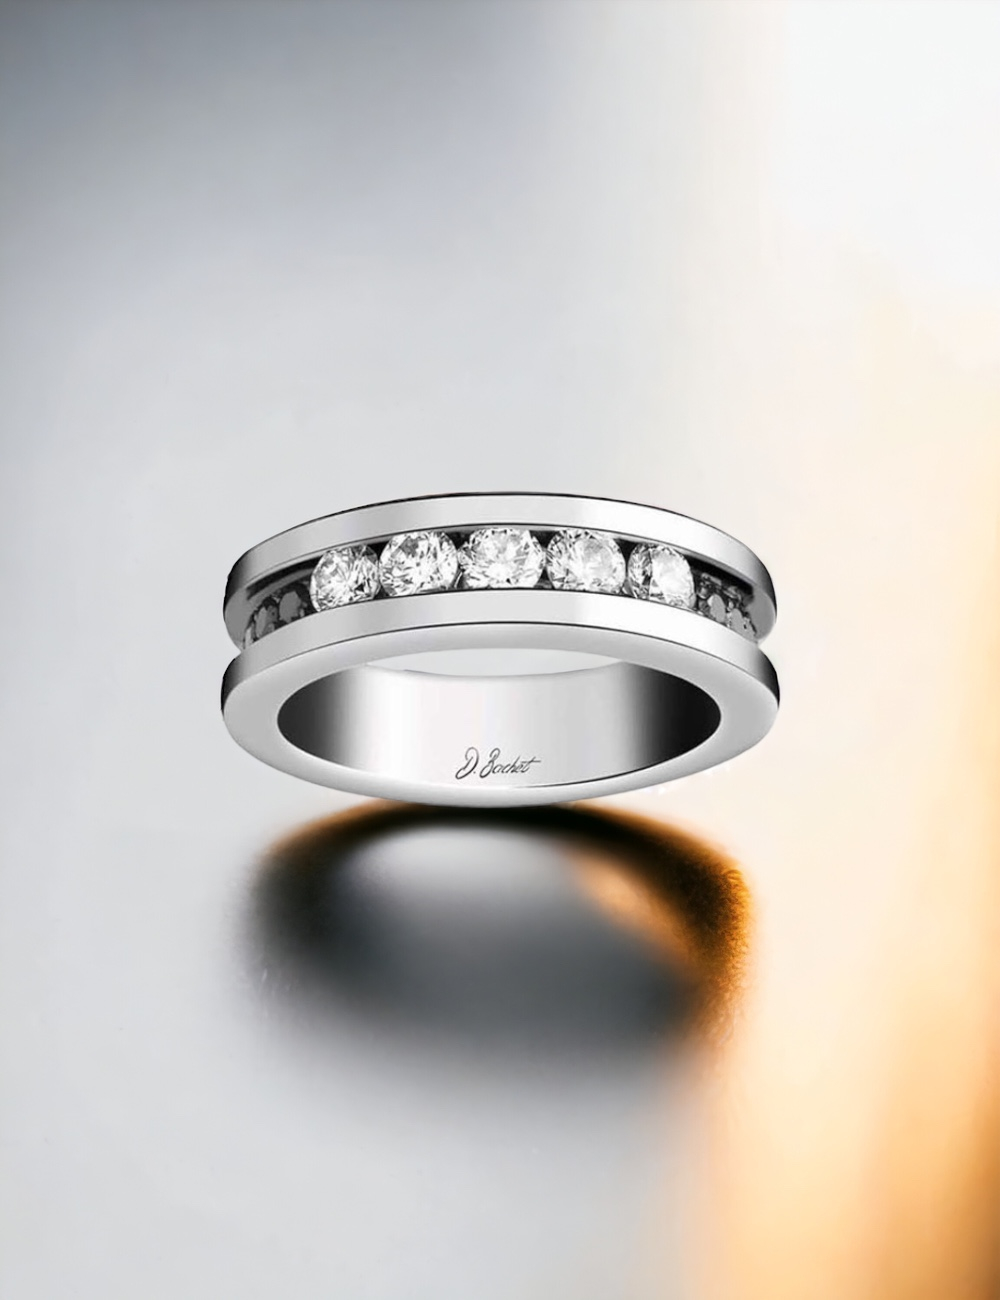 Elegant 'Light in Paris' platinum wedding band with 0.50 carat white diamonds and black diamond accents.